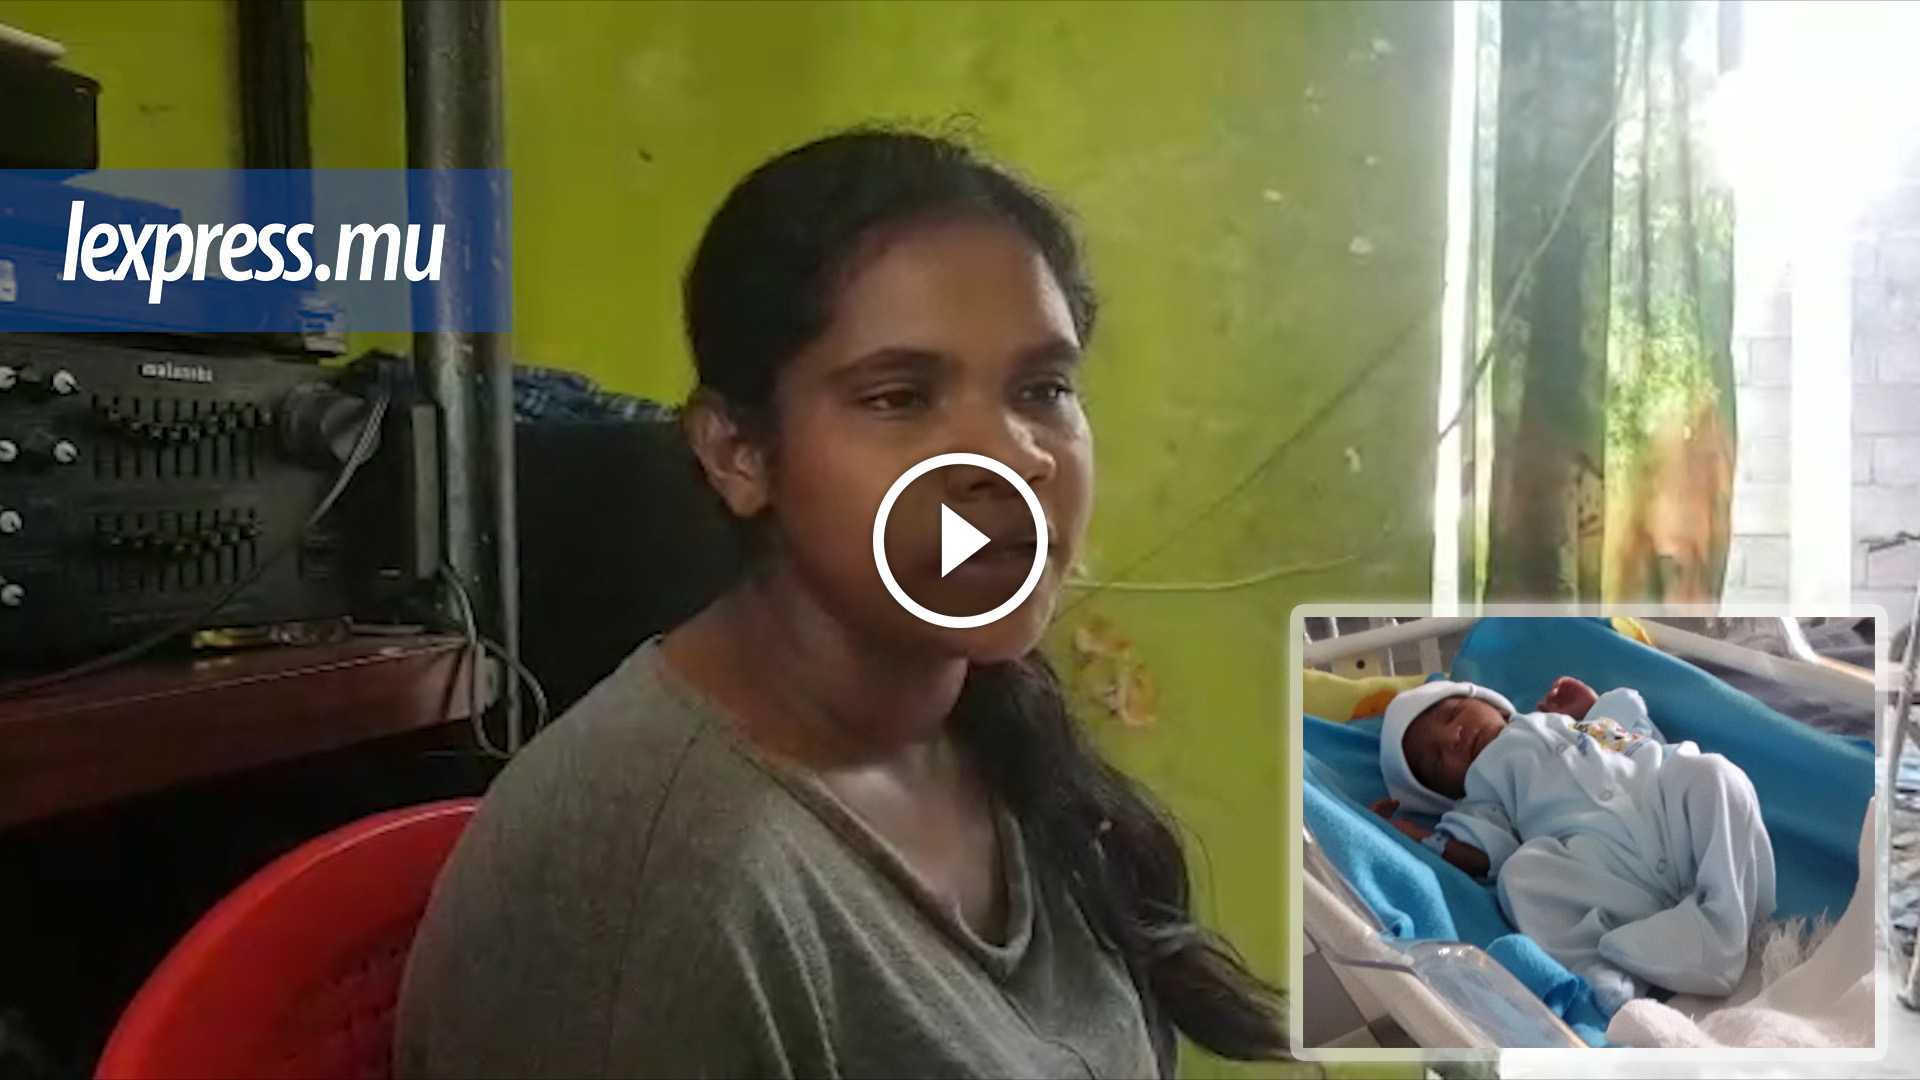 Négligence médicale alléguée: Elsa Faro pleure son fils Luciano, 4 jours